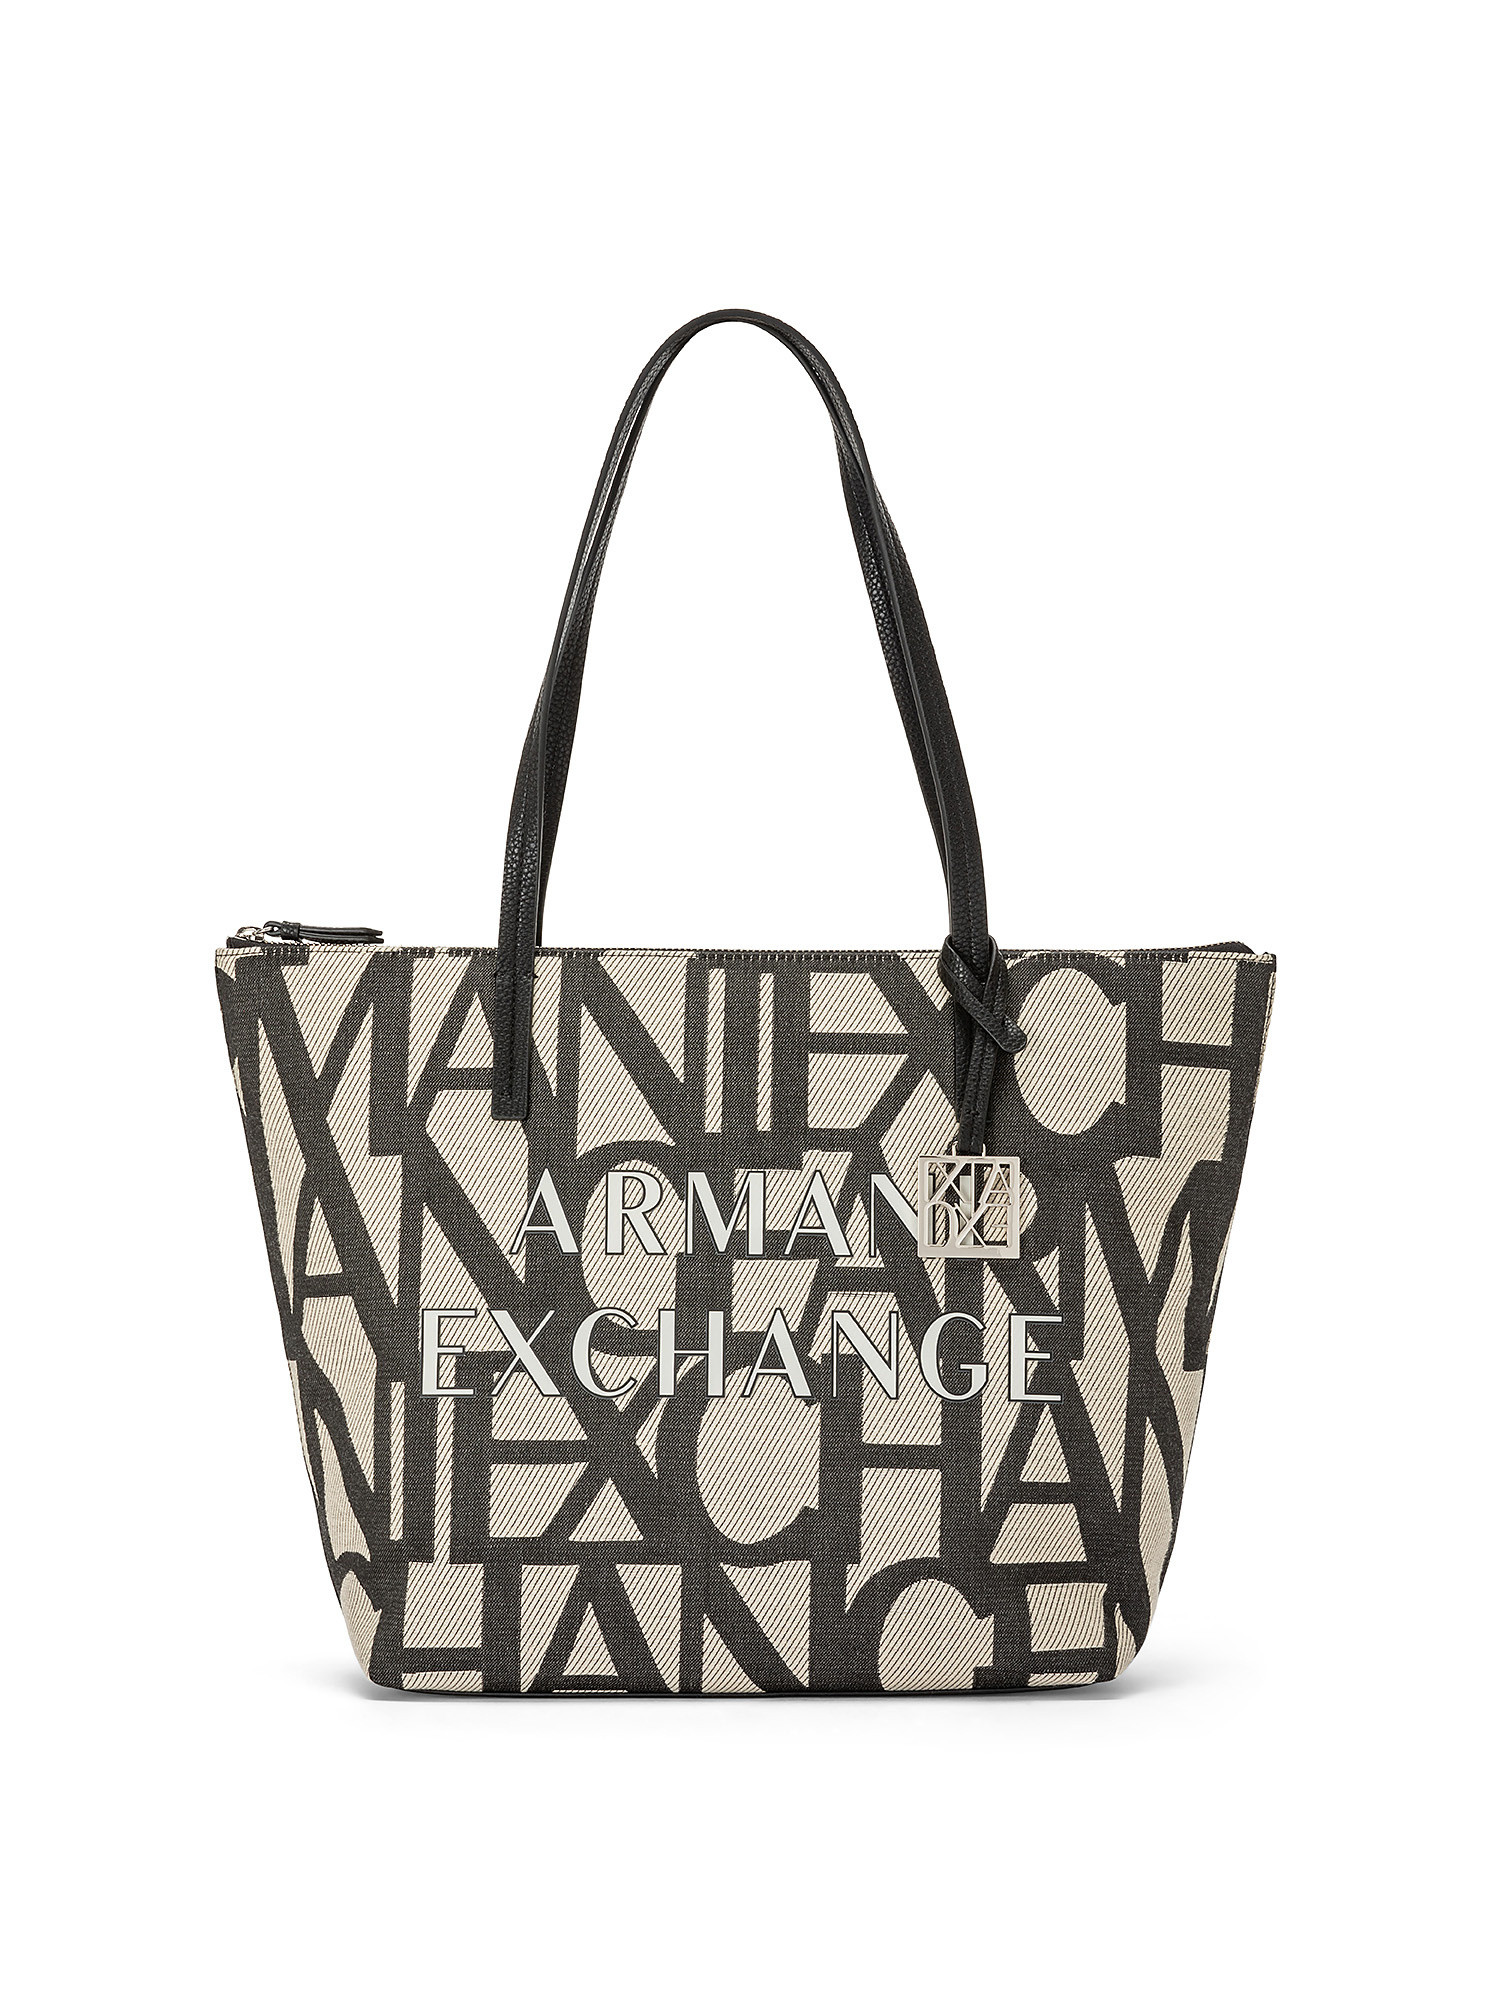 Shopping bag con cerniera superiore, Bianco, large image number 0